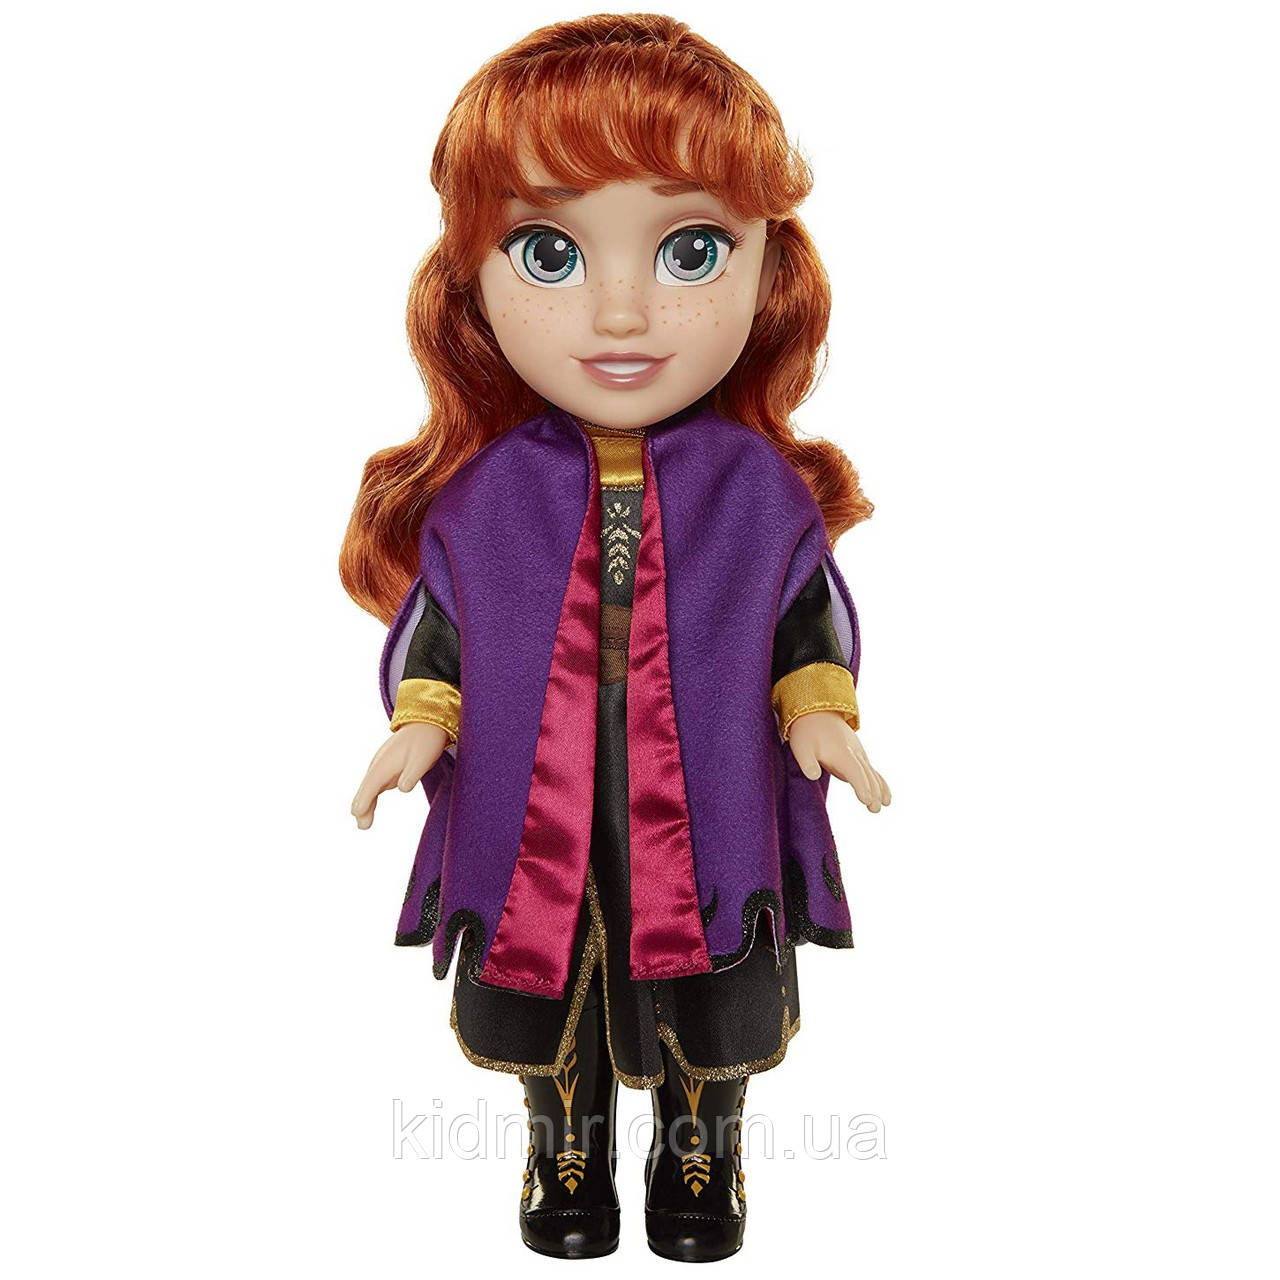 Лялька крихітка Анна Принцеса Дісней Disney Toddler Anna 20282